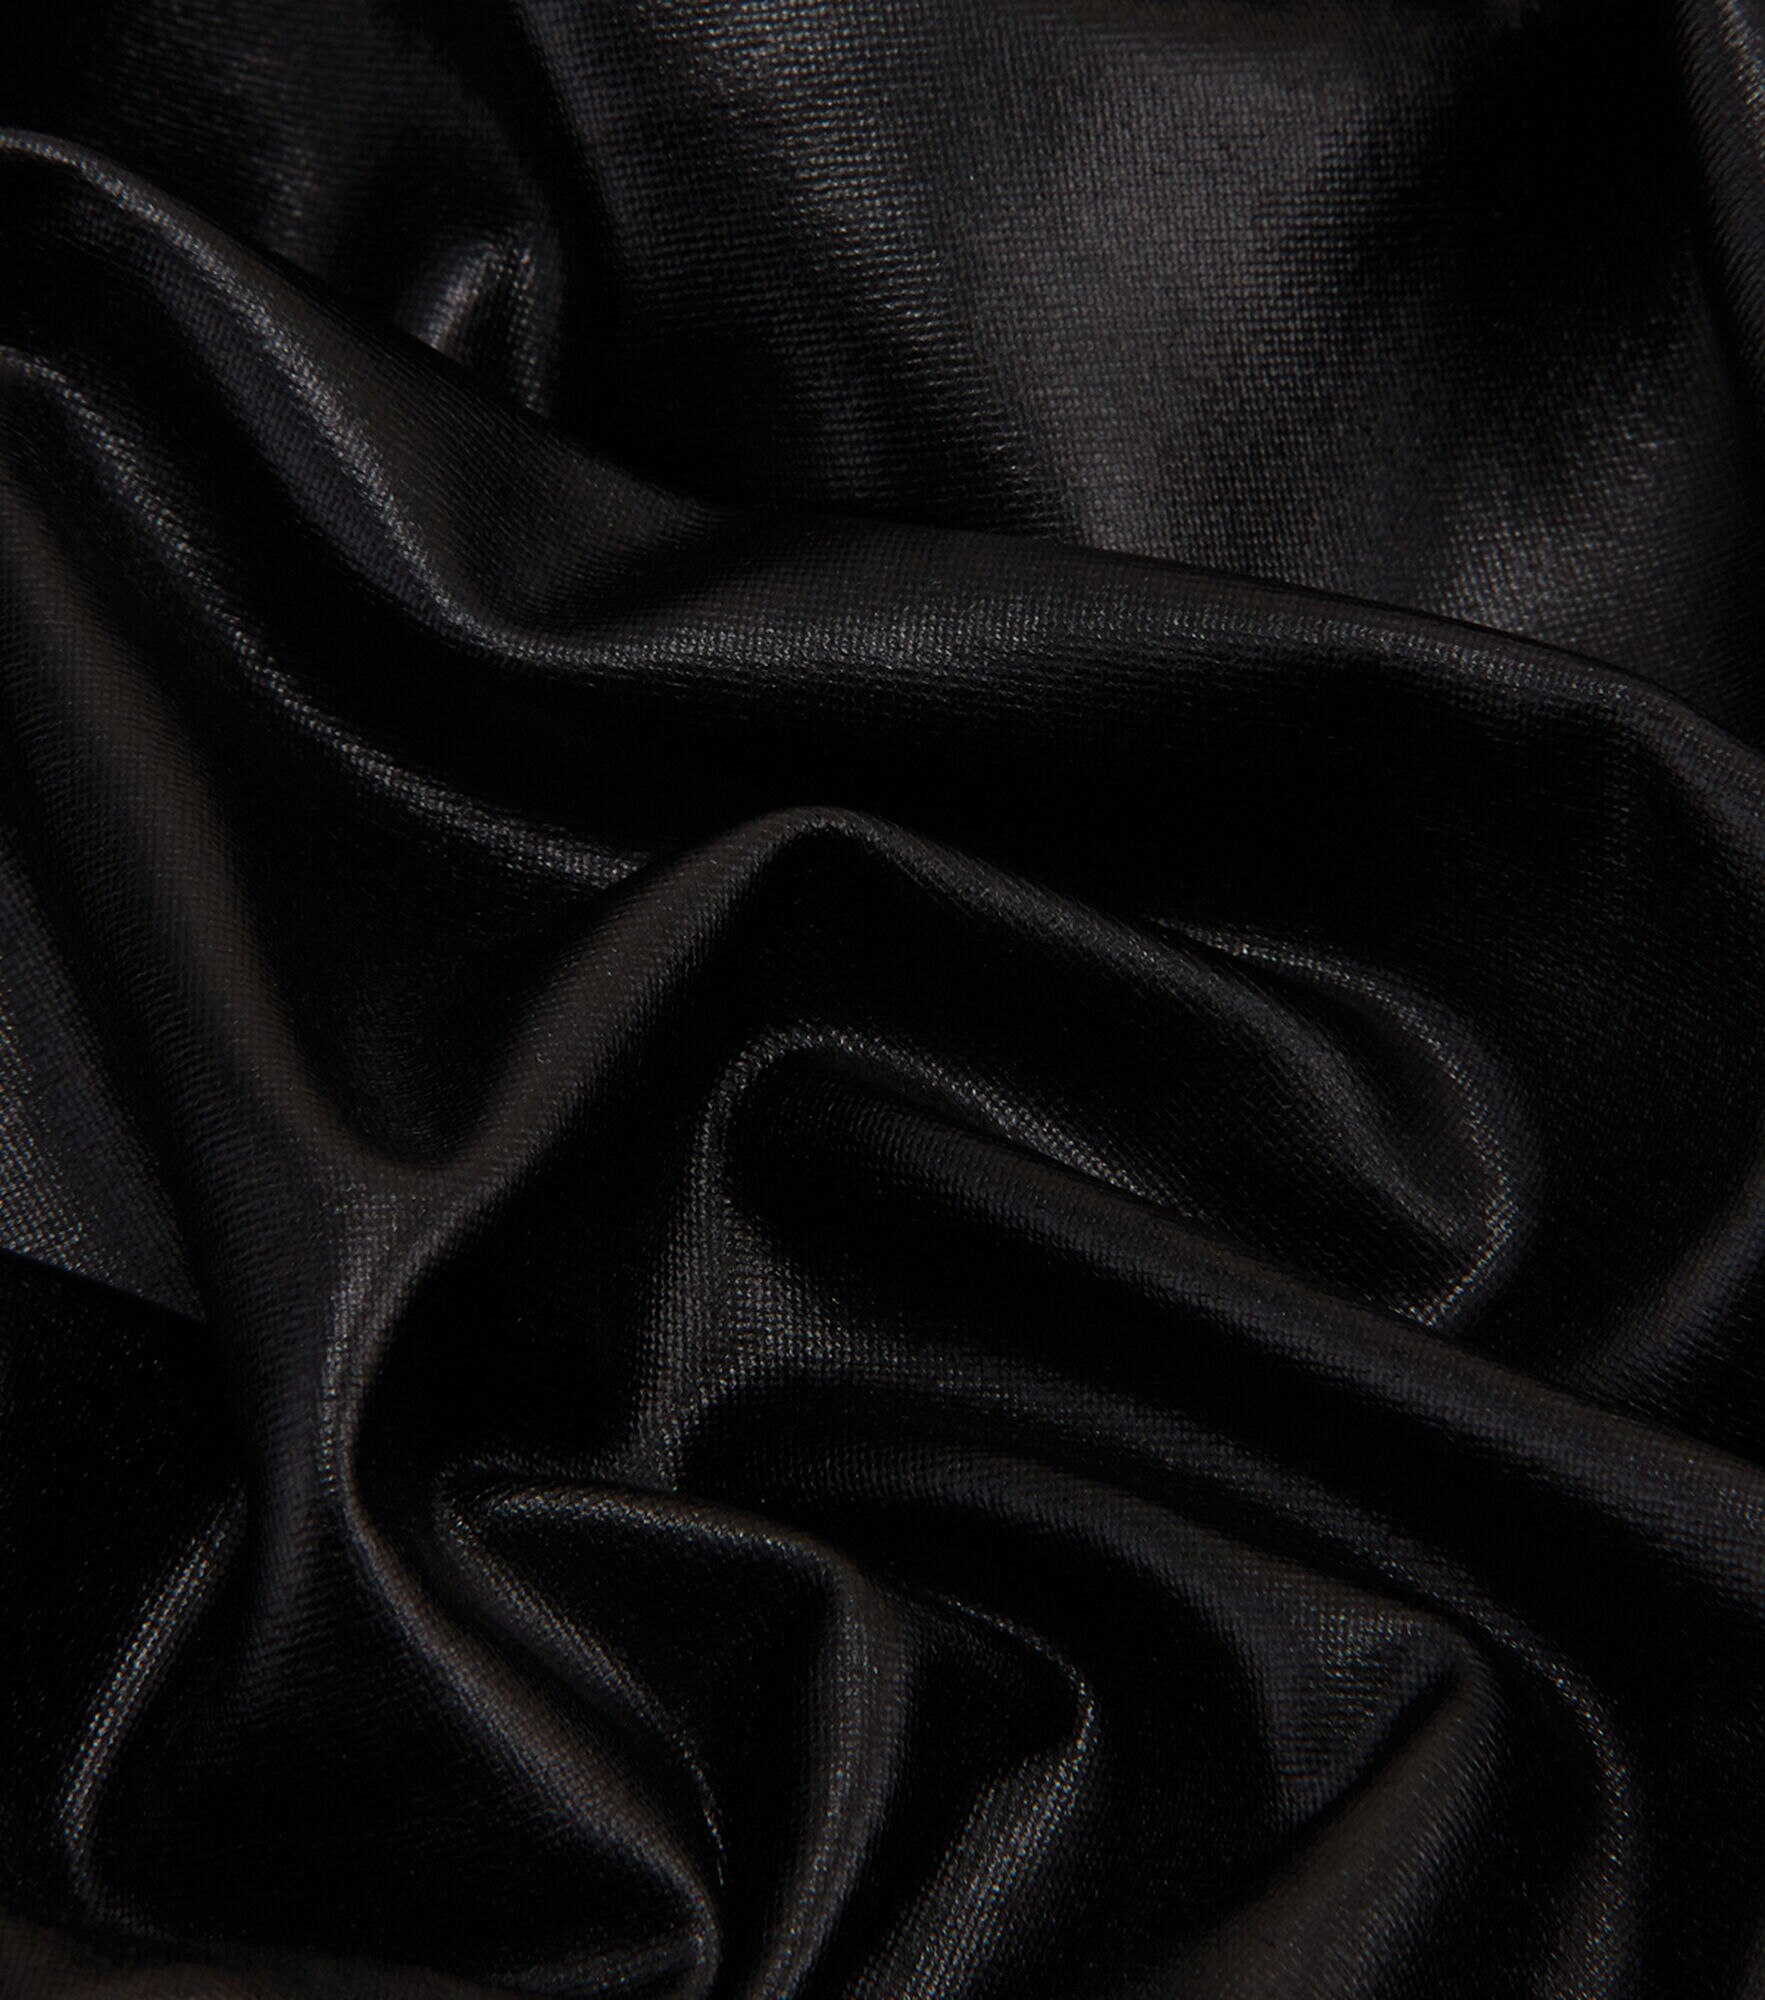 Black Metallic Fabric - Cosplay by Yaya Han